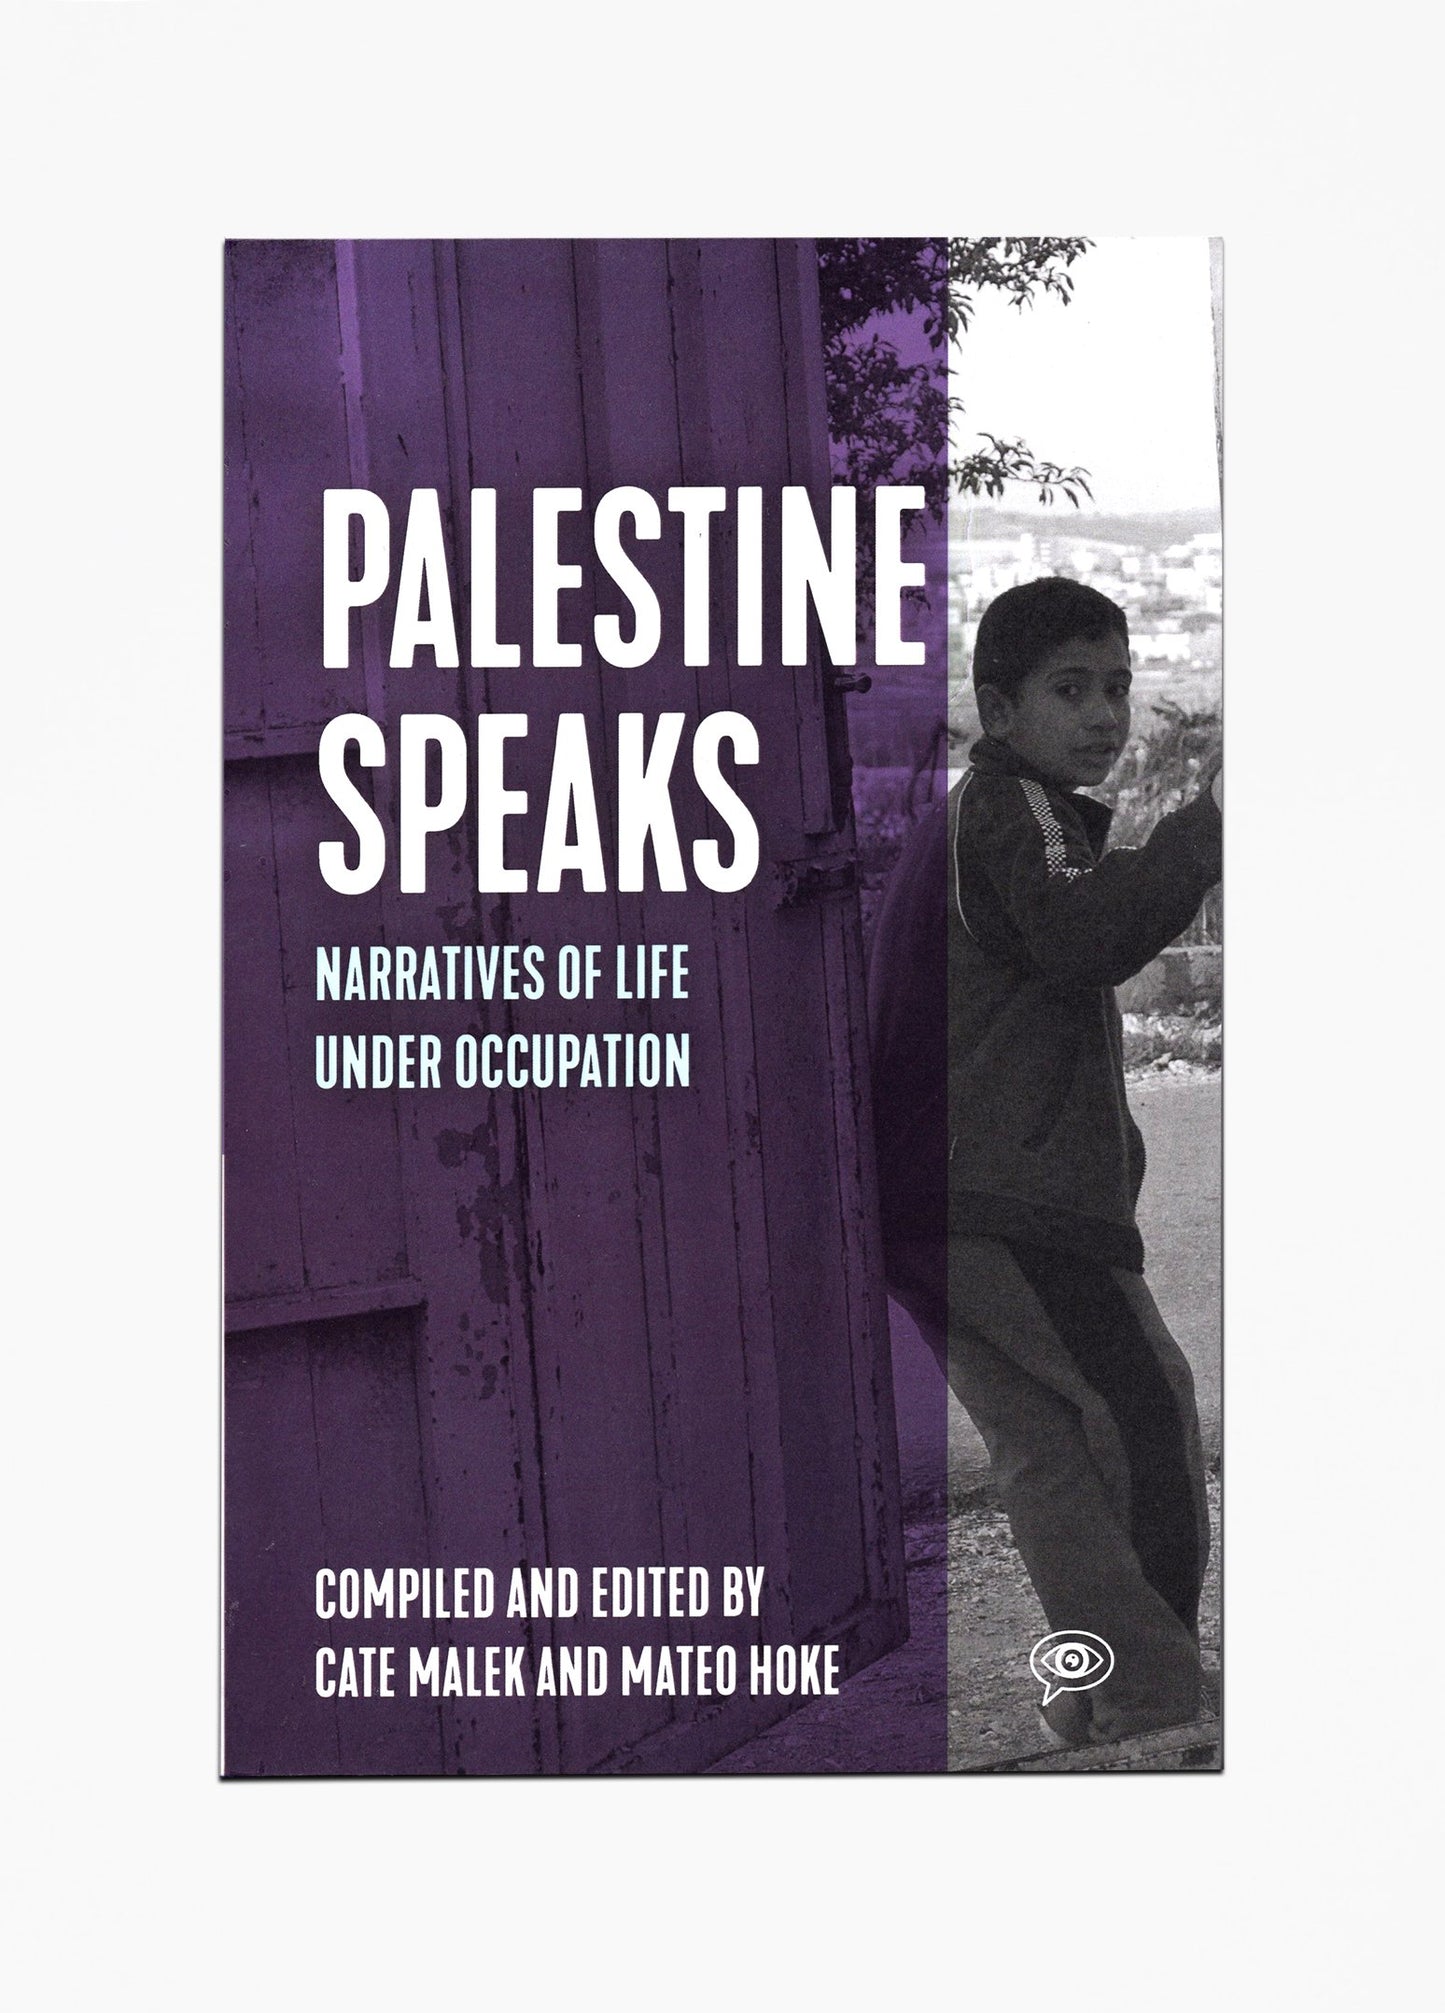 Palestine Speaks: Narratives of Life Under Occupation